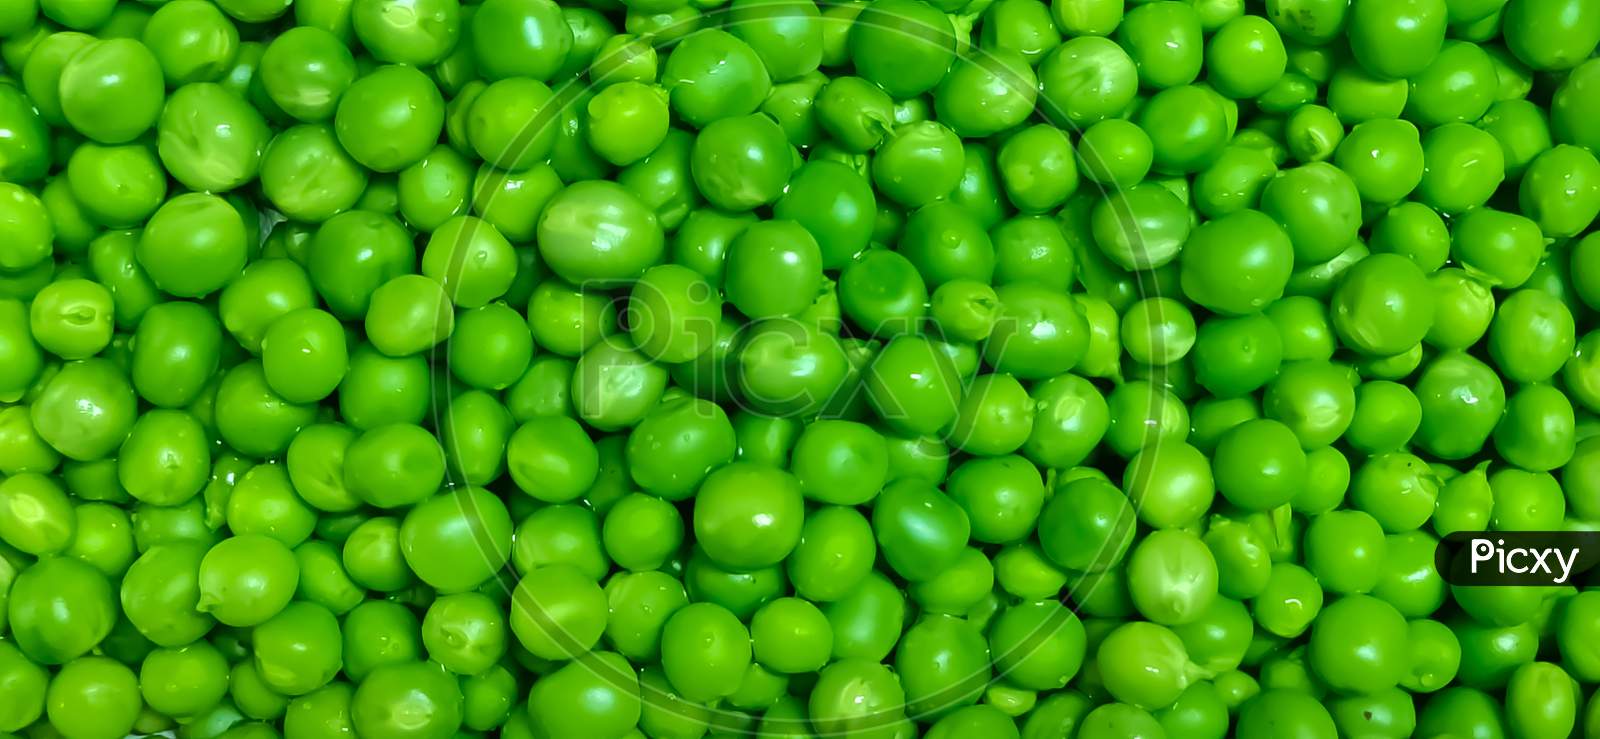 Photo of green mutter seeds